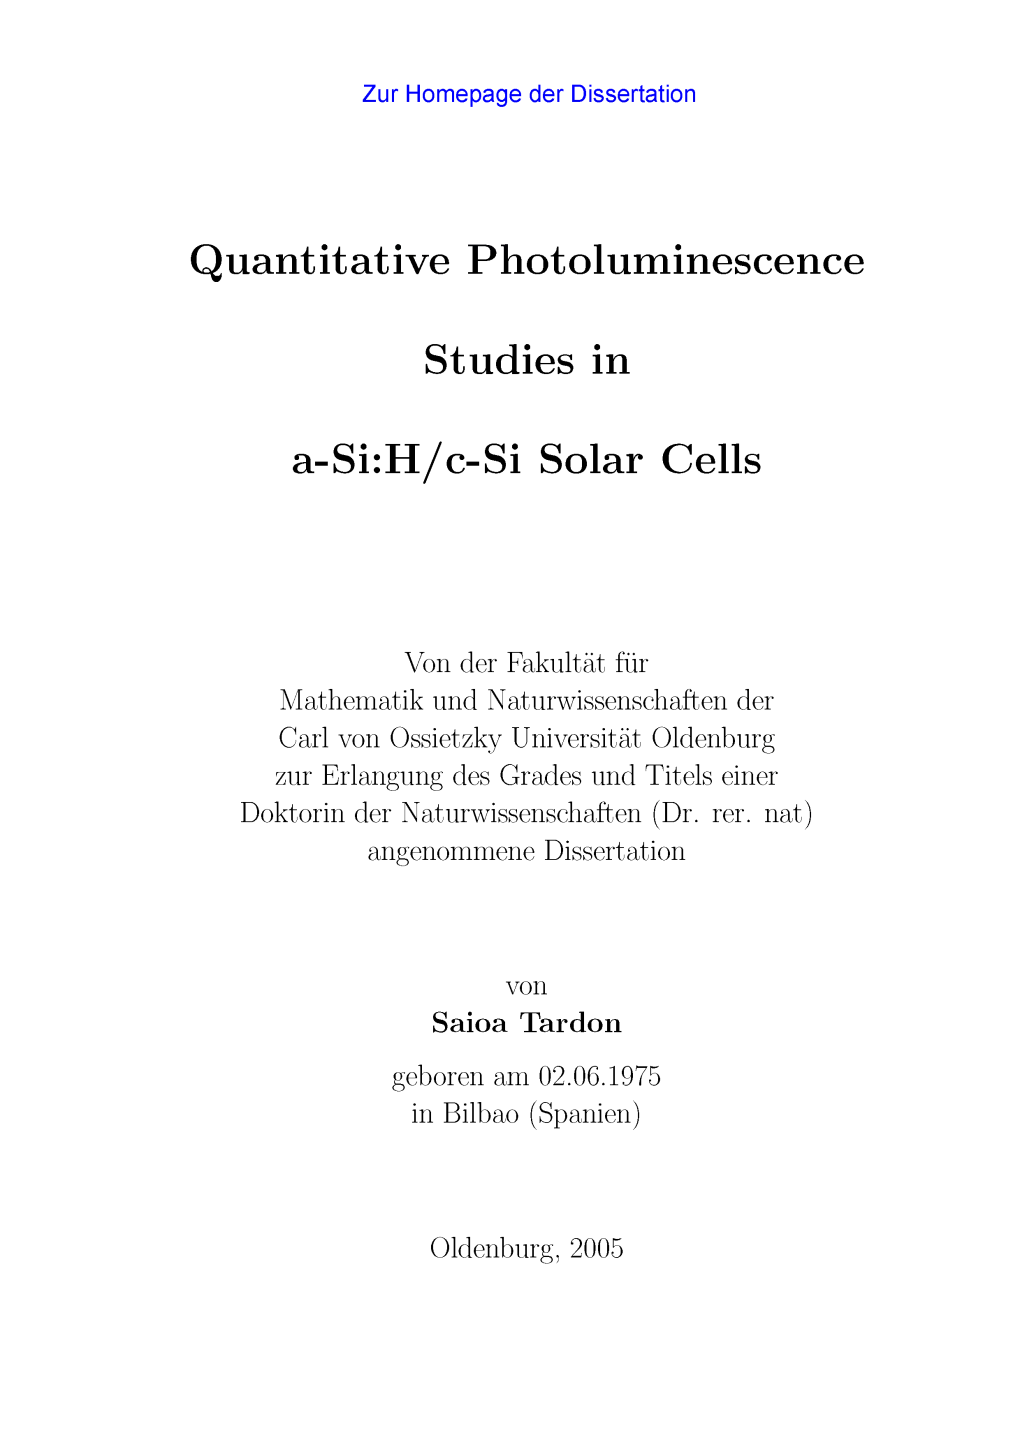 Quantitative Photoluminescence Studies in A-Si:H/C-Si Solar Cells